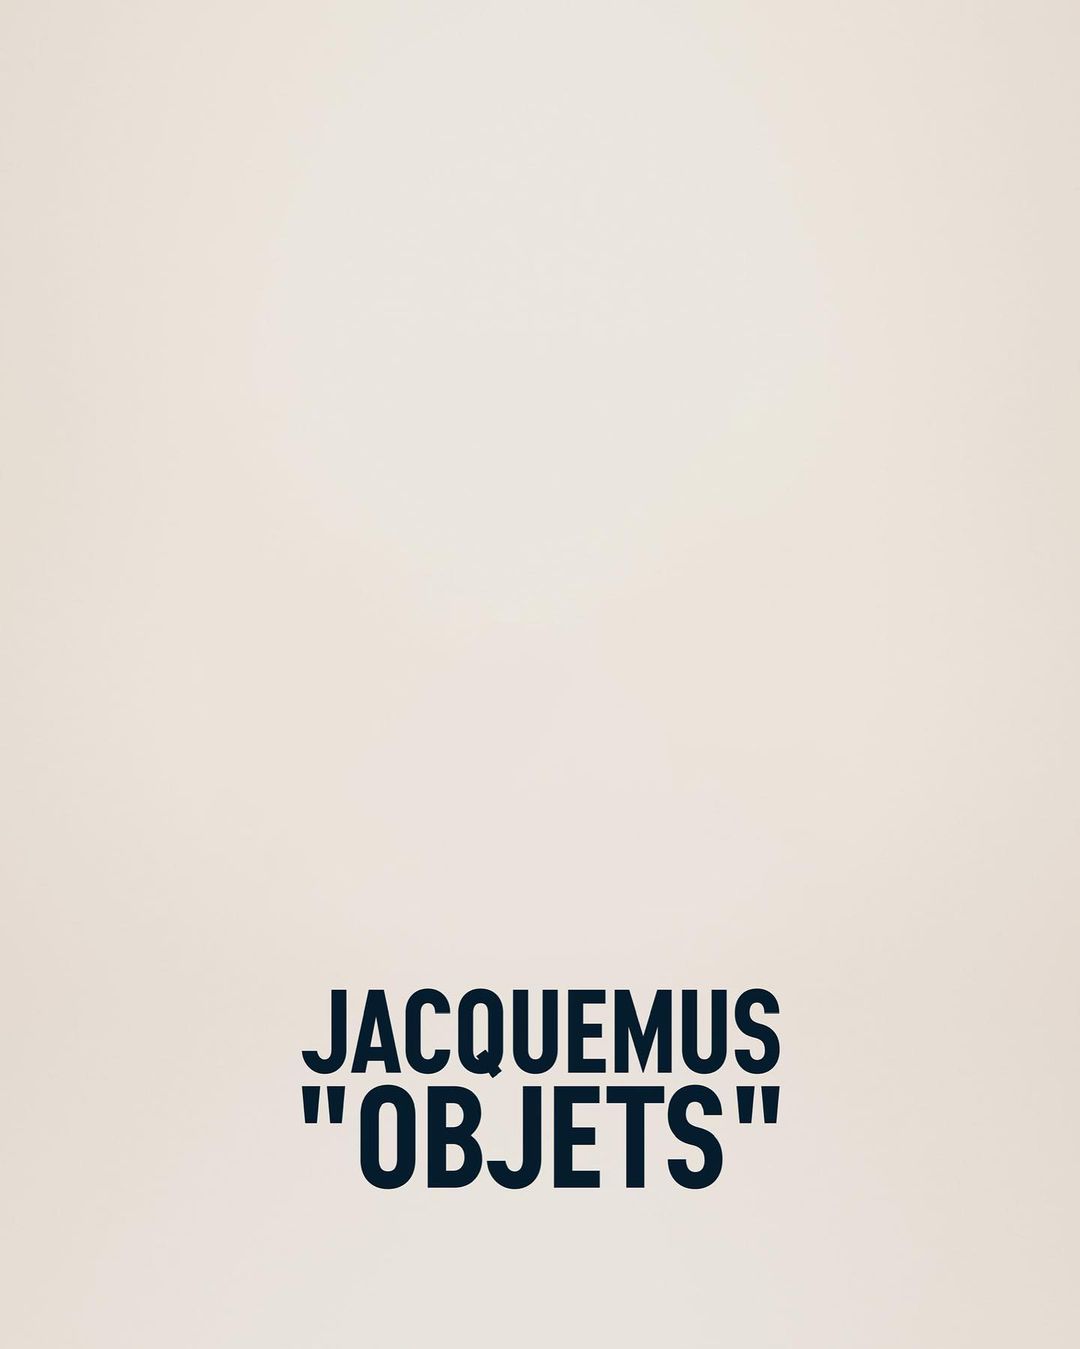 Objets,Jacquemus,gae aulenti,Exteta,mobilier outdoor,outdoor,Simon porte Jacquemus,oscar Niemeyer,brésil